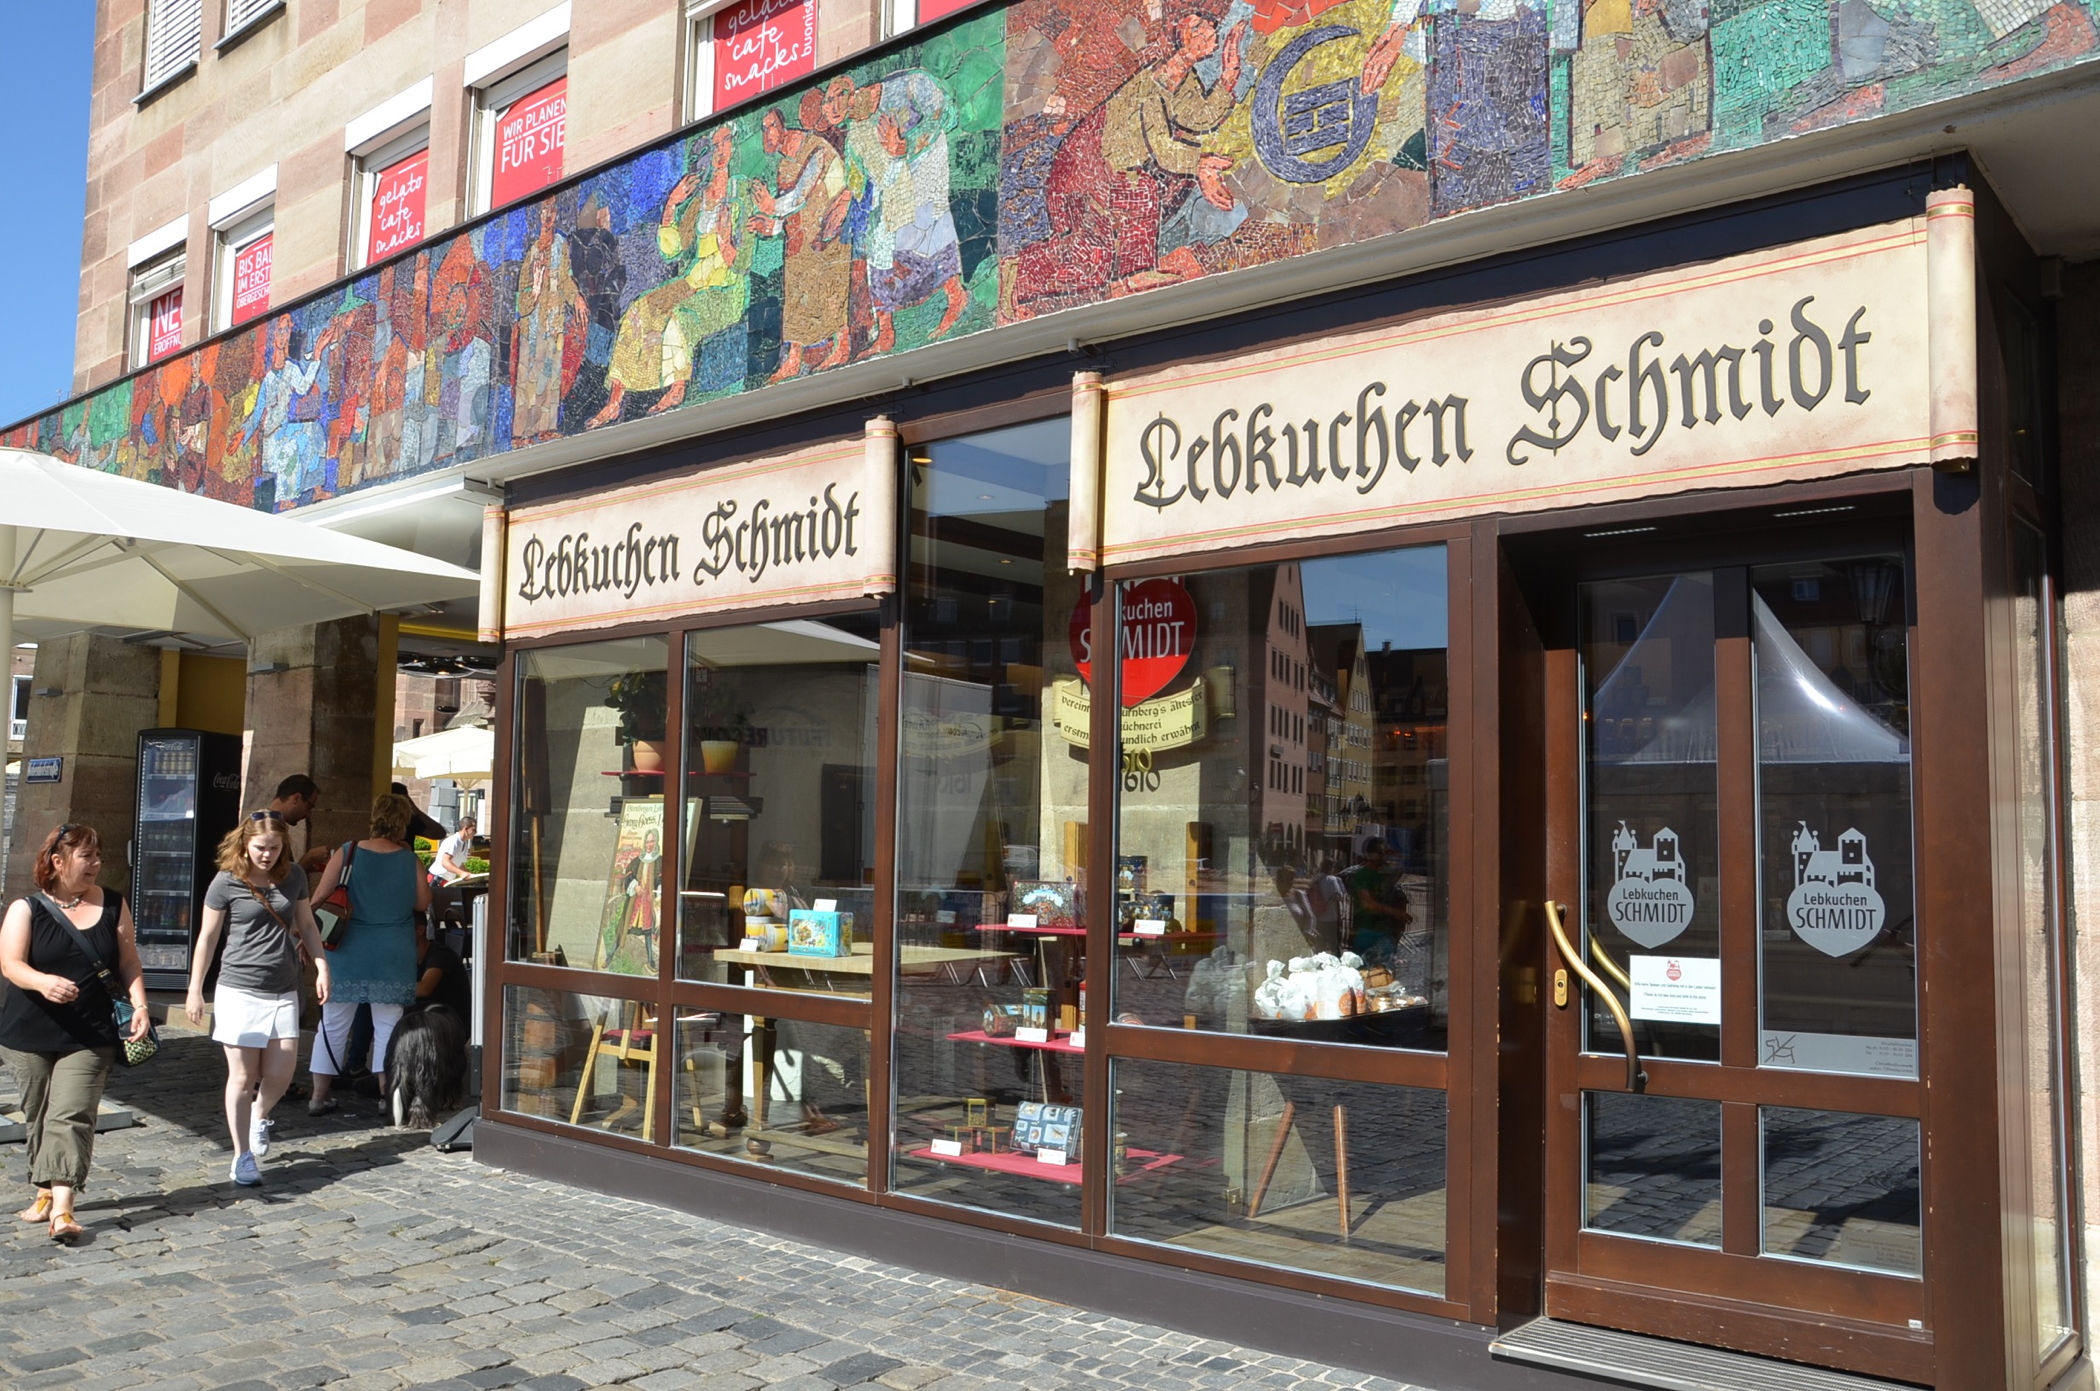 Restaurants Nürnberg wie bei Lebkuchen Schmidt